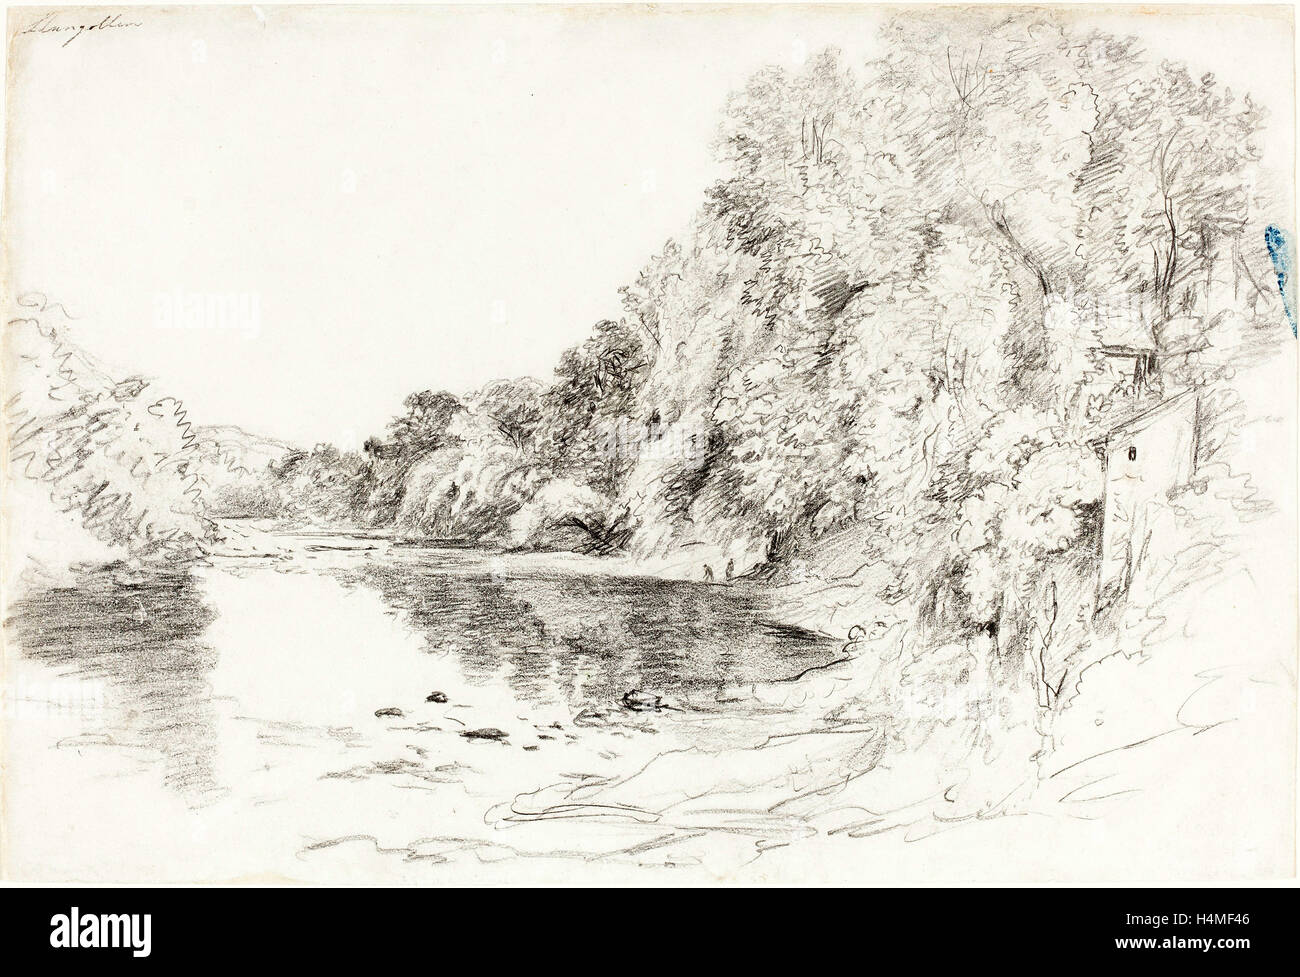 John Glover (British, 1767 - 1849), The River at Llangollen, c. 1795, graphite on wove paper Stock Photo